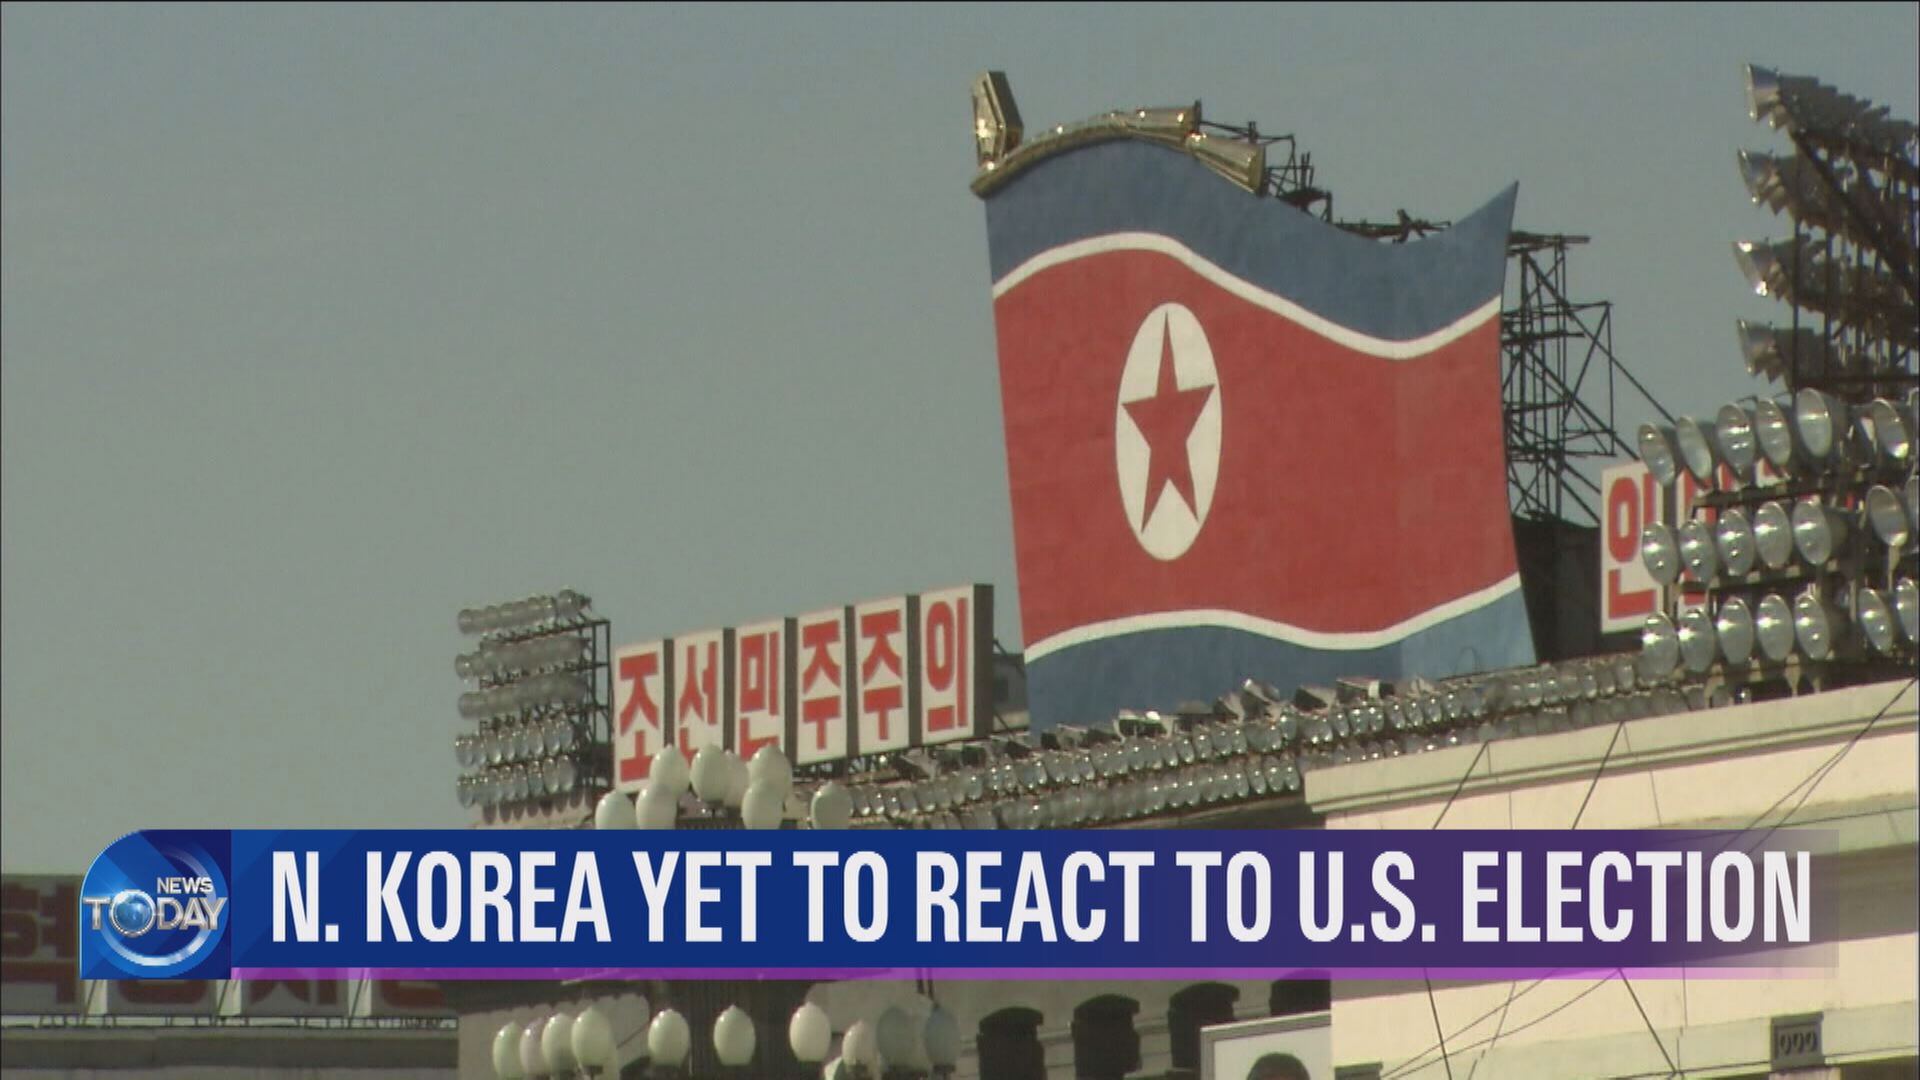 N. KOREA YET TO REACT TO U.S. ELECTION